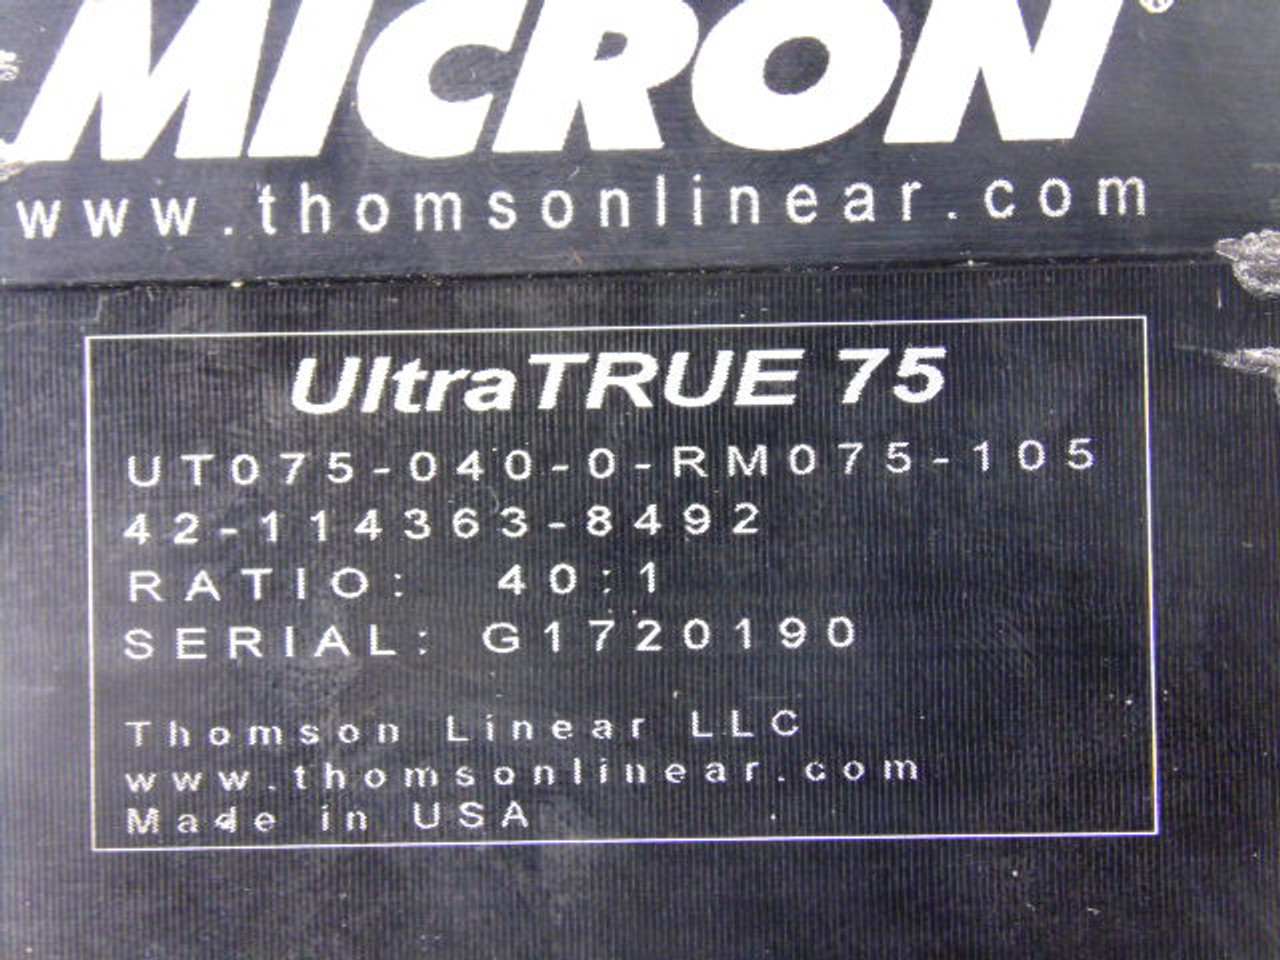 Thomson 42-114363-8492 Ultra True 75 Gear Head USED